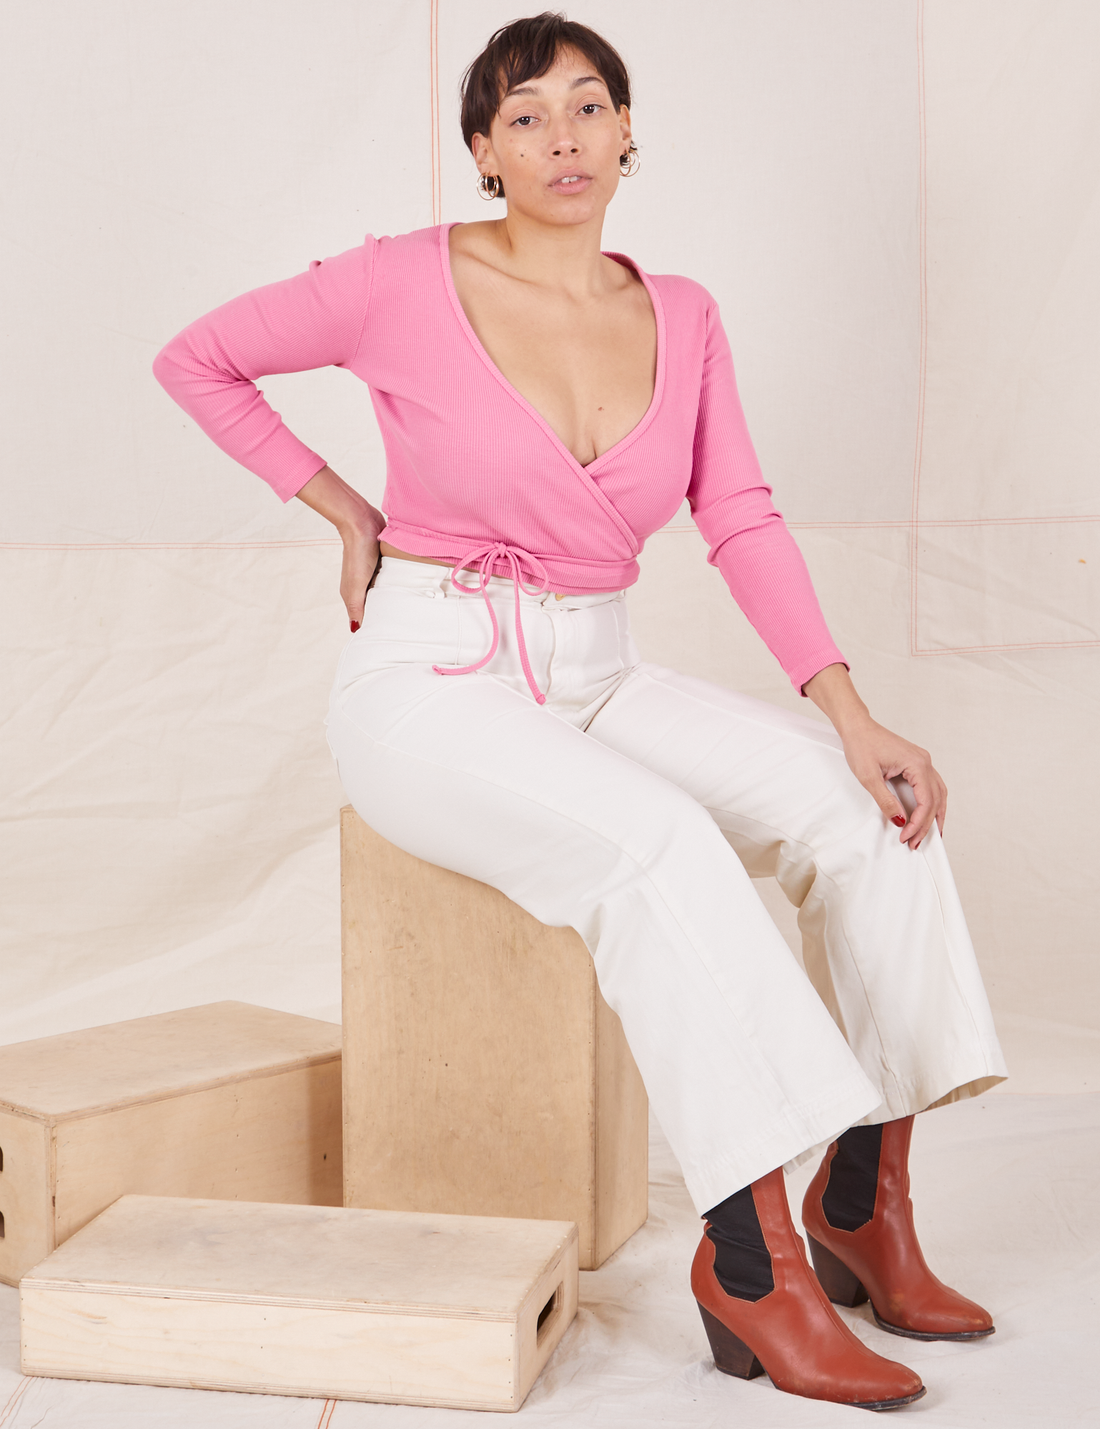 Wrap Top in Bubblegum Pink on Tiara wearing vintage off-white Western Pants sitting on wooden crate